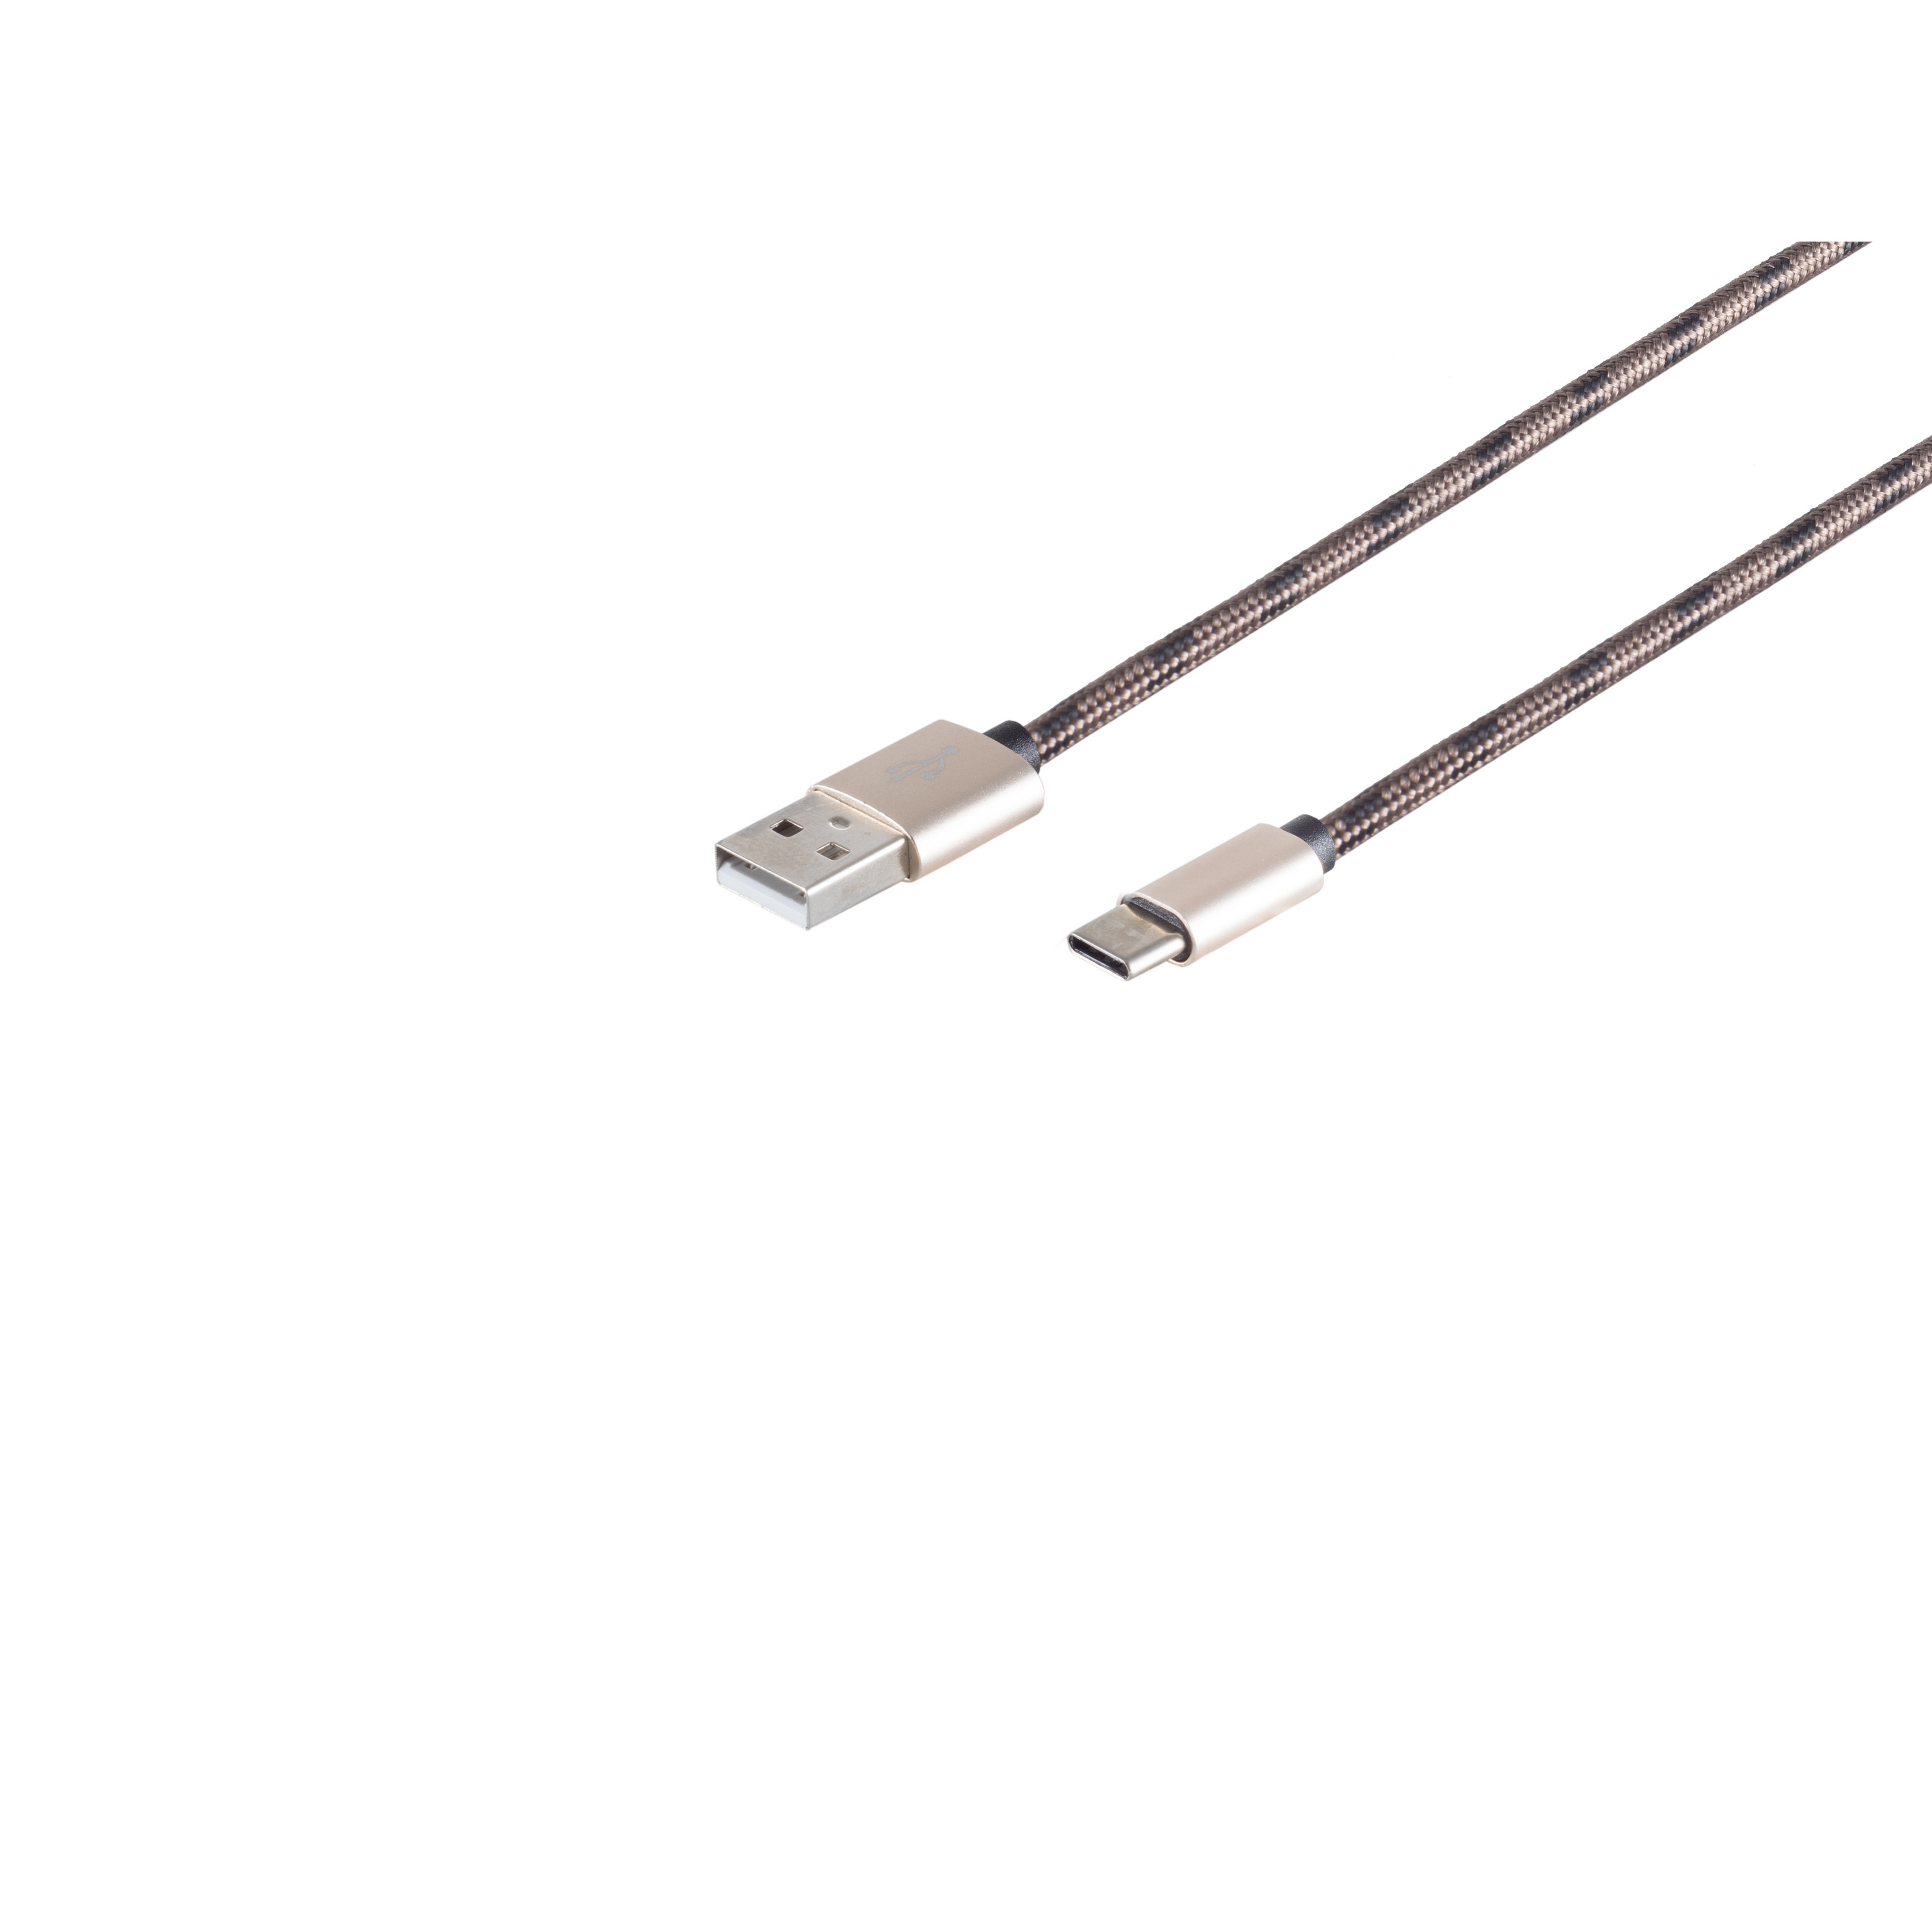 S/CONN MAXIMUM CONNECTIVITY C USB-Ladekabel 2m Stecker auf USB braun Kabel A USB Typ